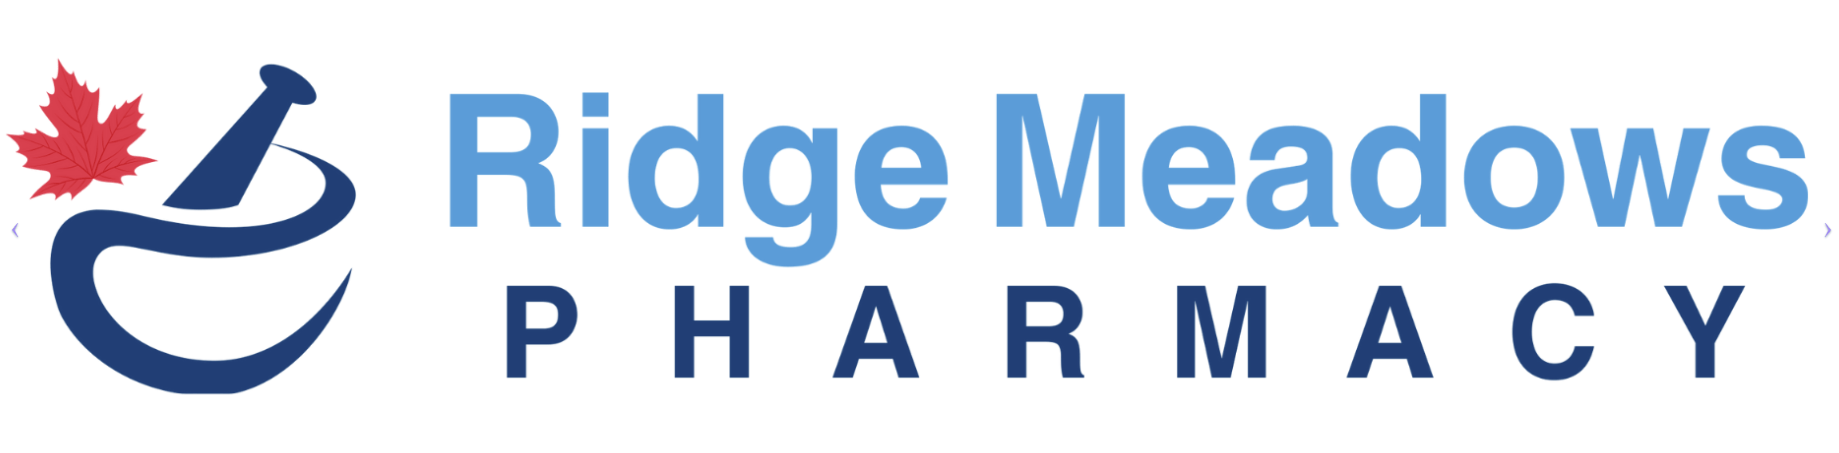 ridge meadows pharmacy logo 1